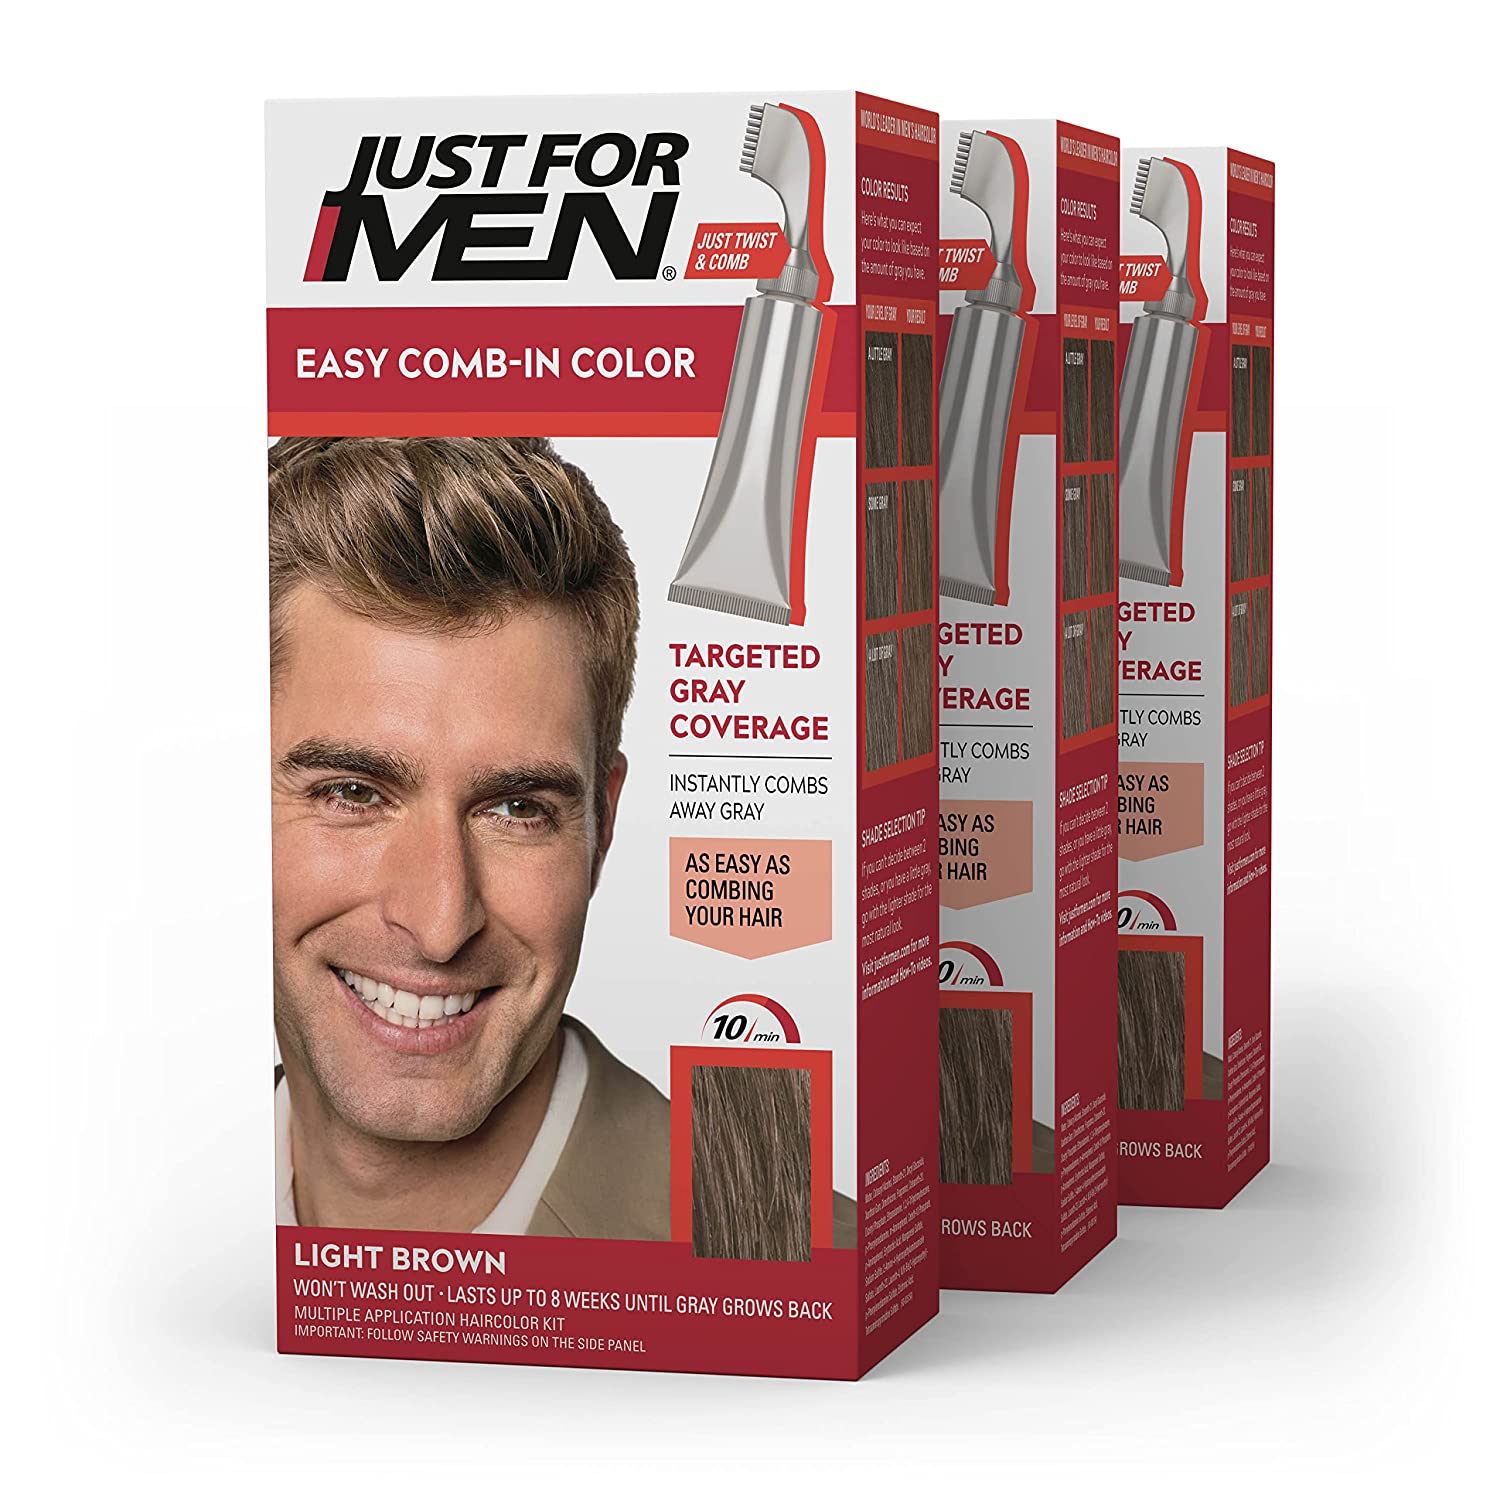 Just For Men Easy Comb-In Color Mens Hair Dye Light Brown 3 Pack